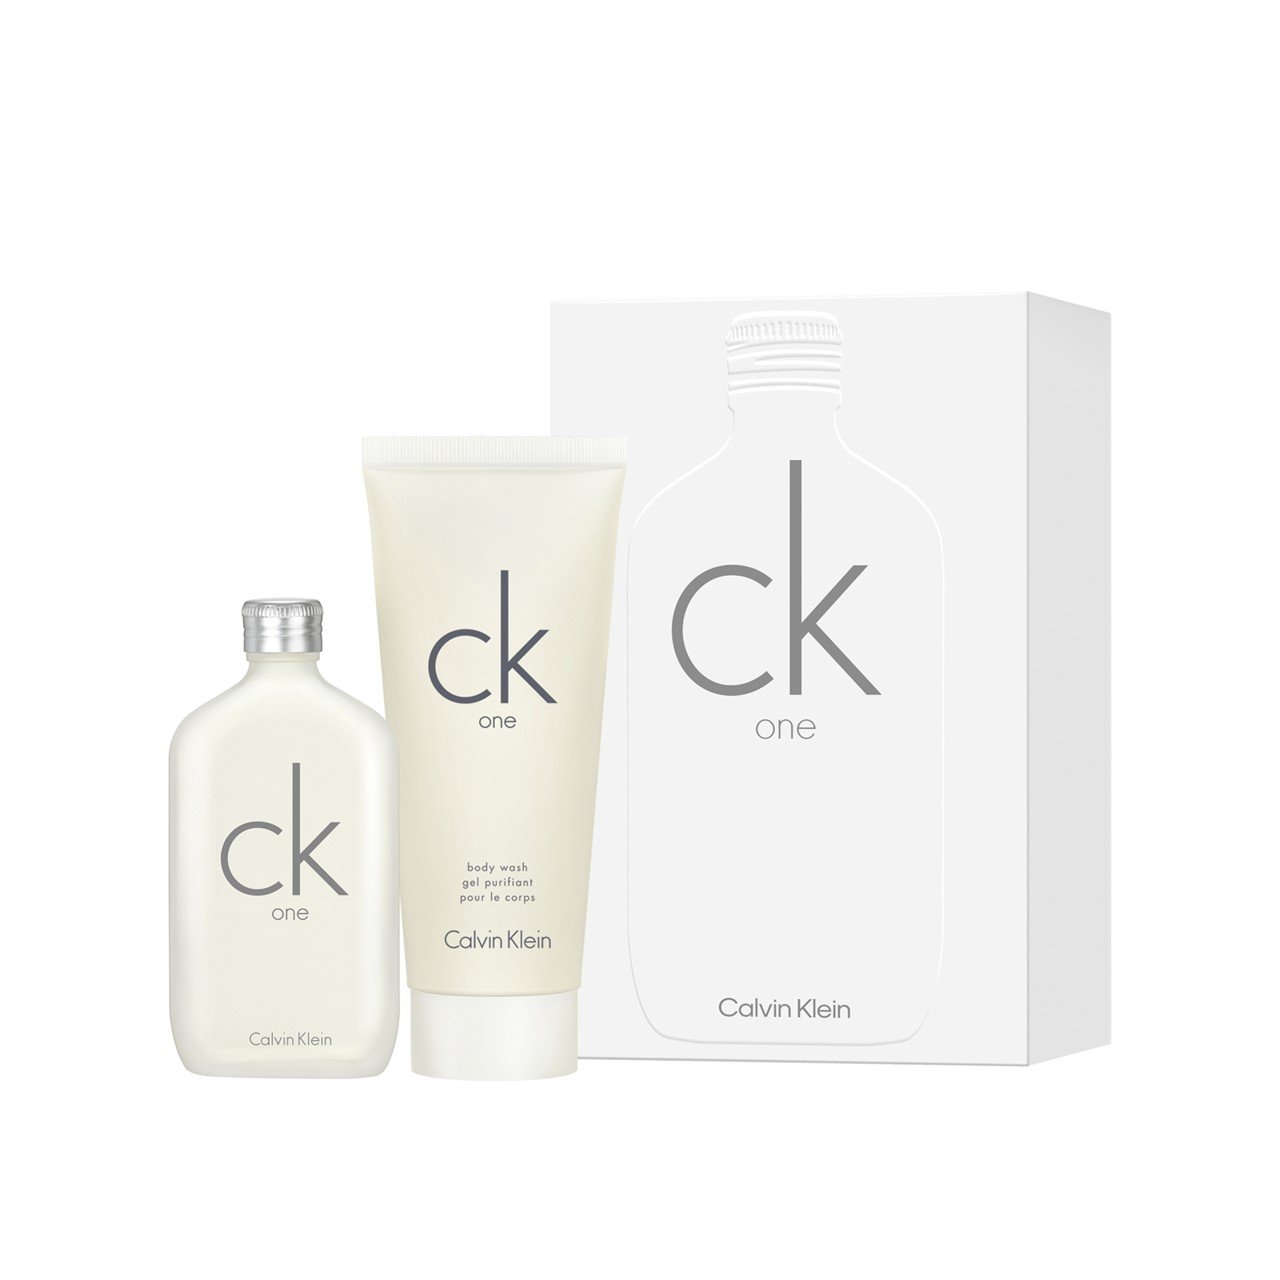 CK One – Perfume Express